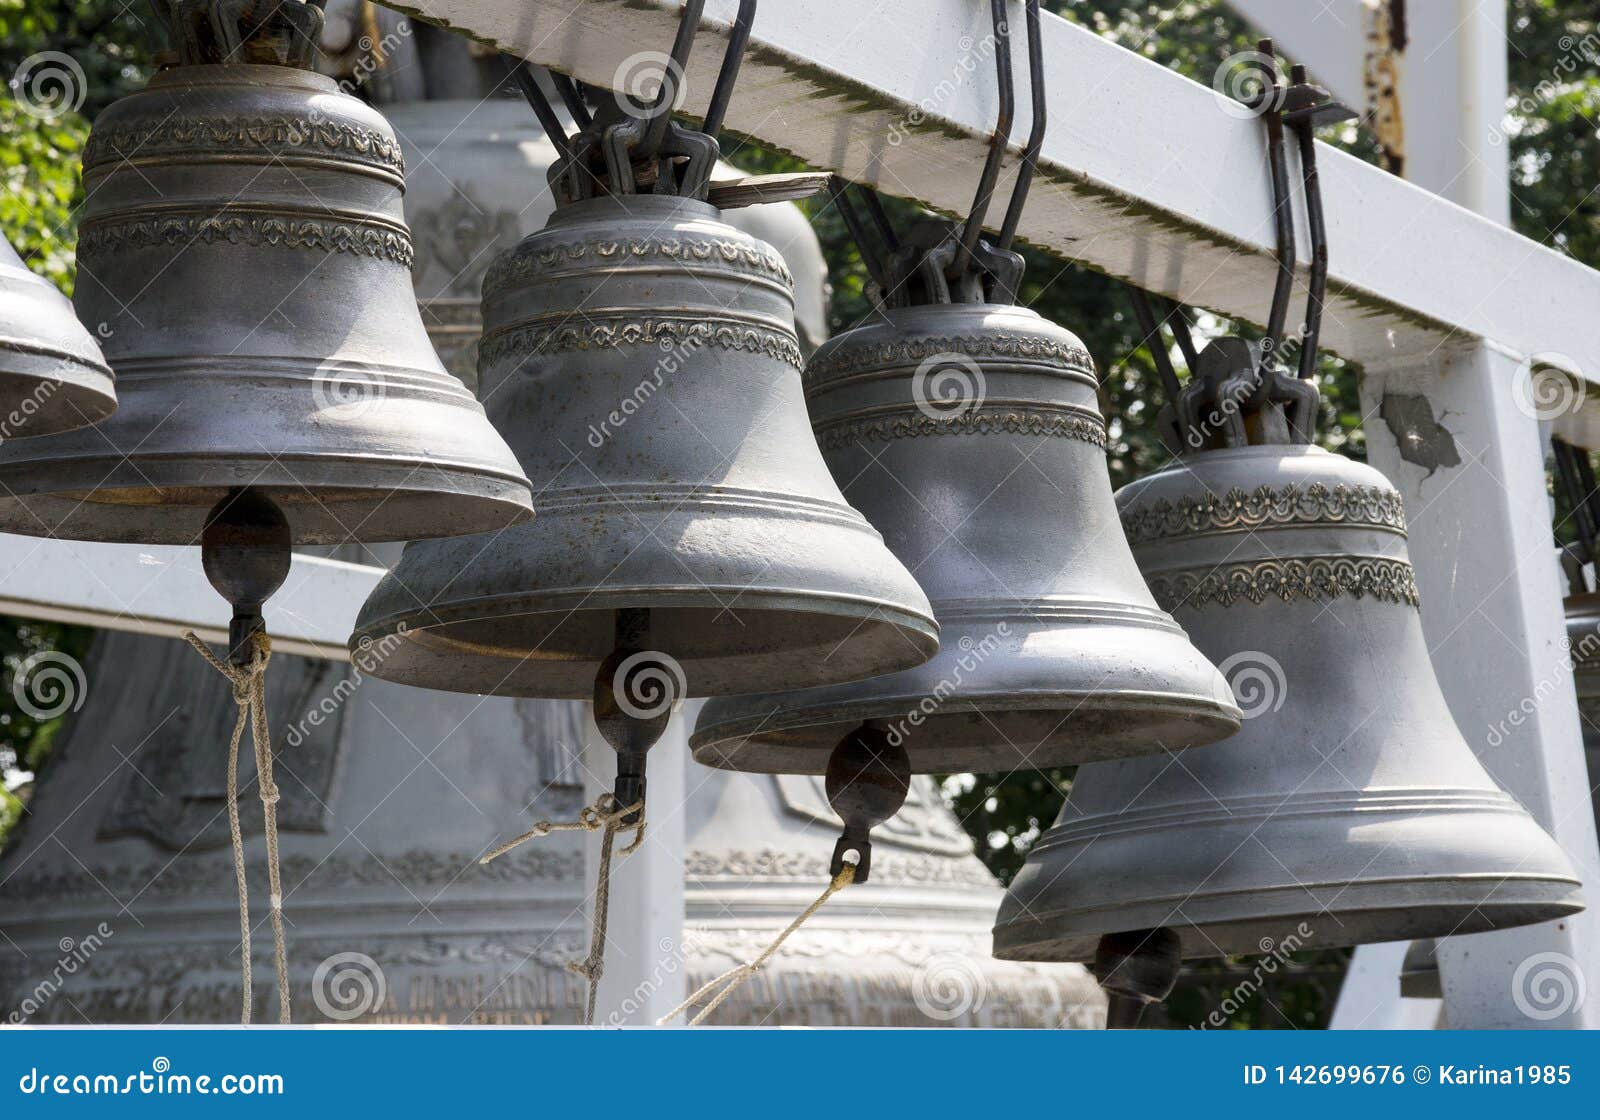 Church Bell, Several Church Bells, Bell Ringing Stock Photo